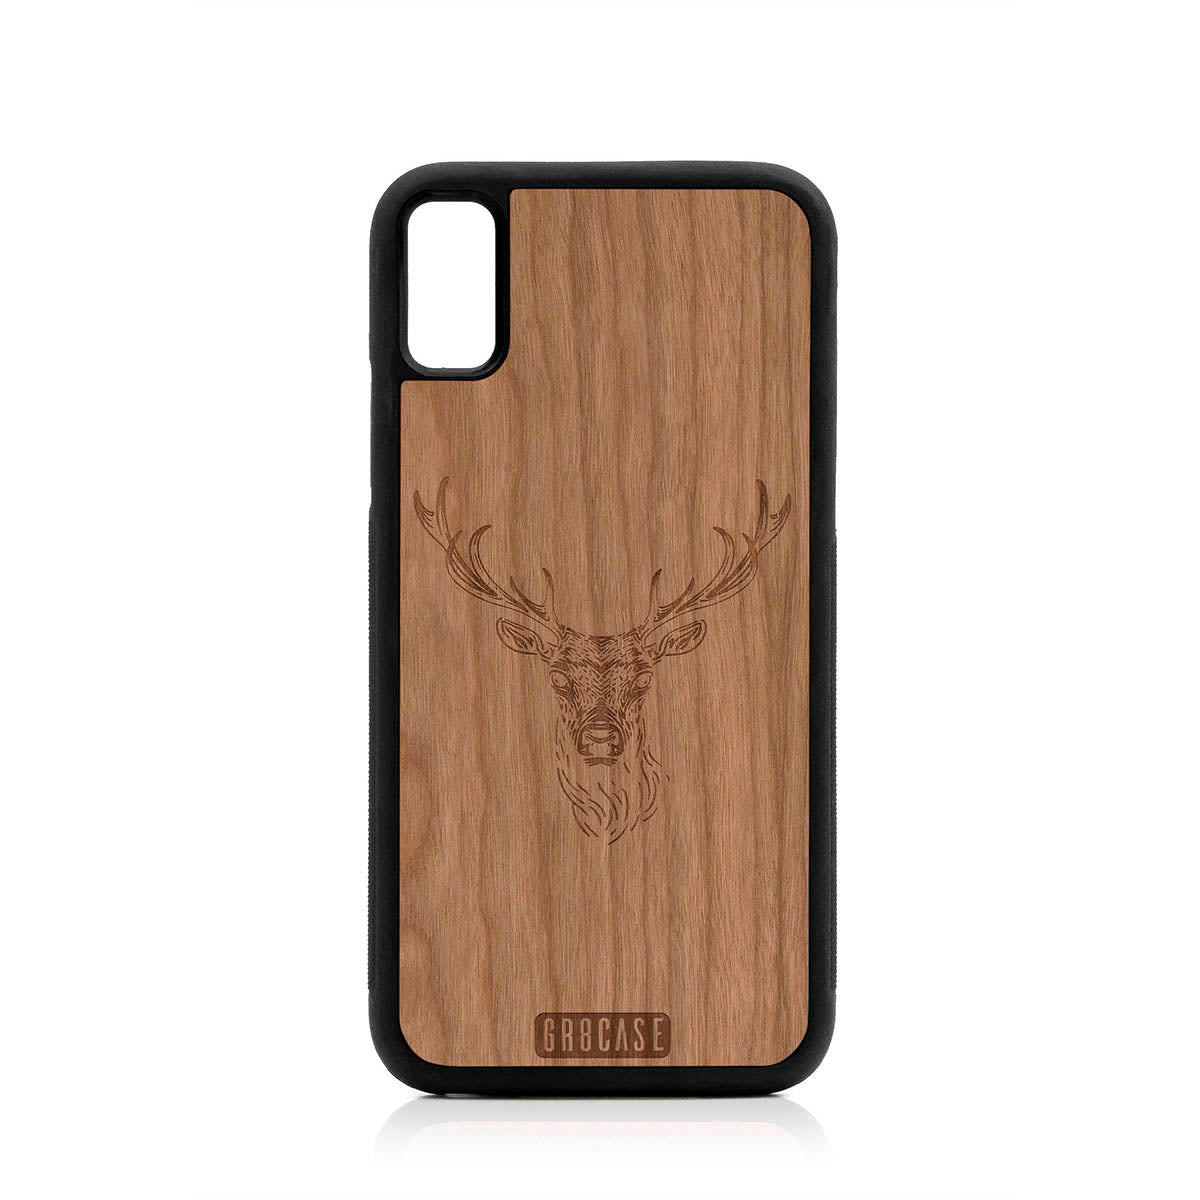 Elk Buck Design Wood Case For iPhone XR by GR8CASE